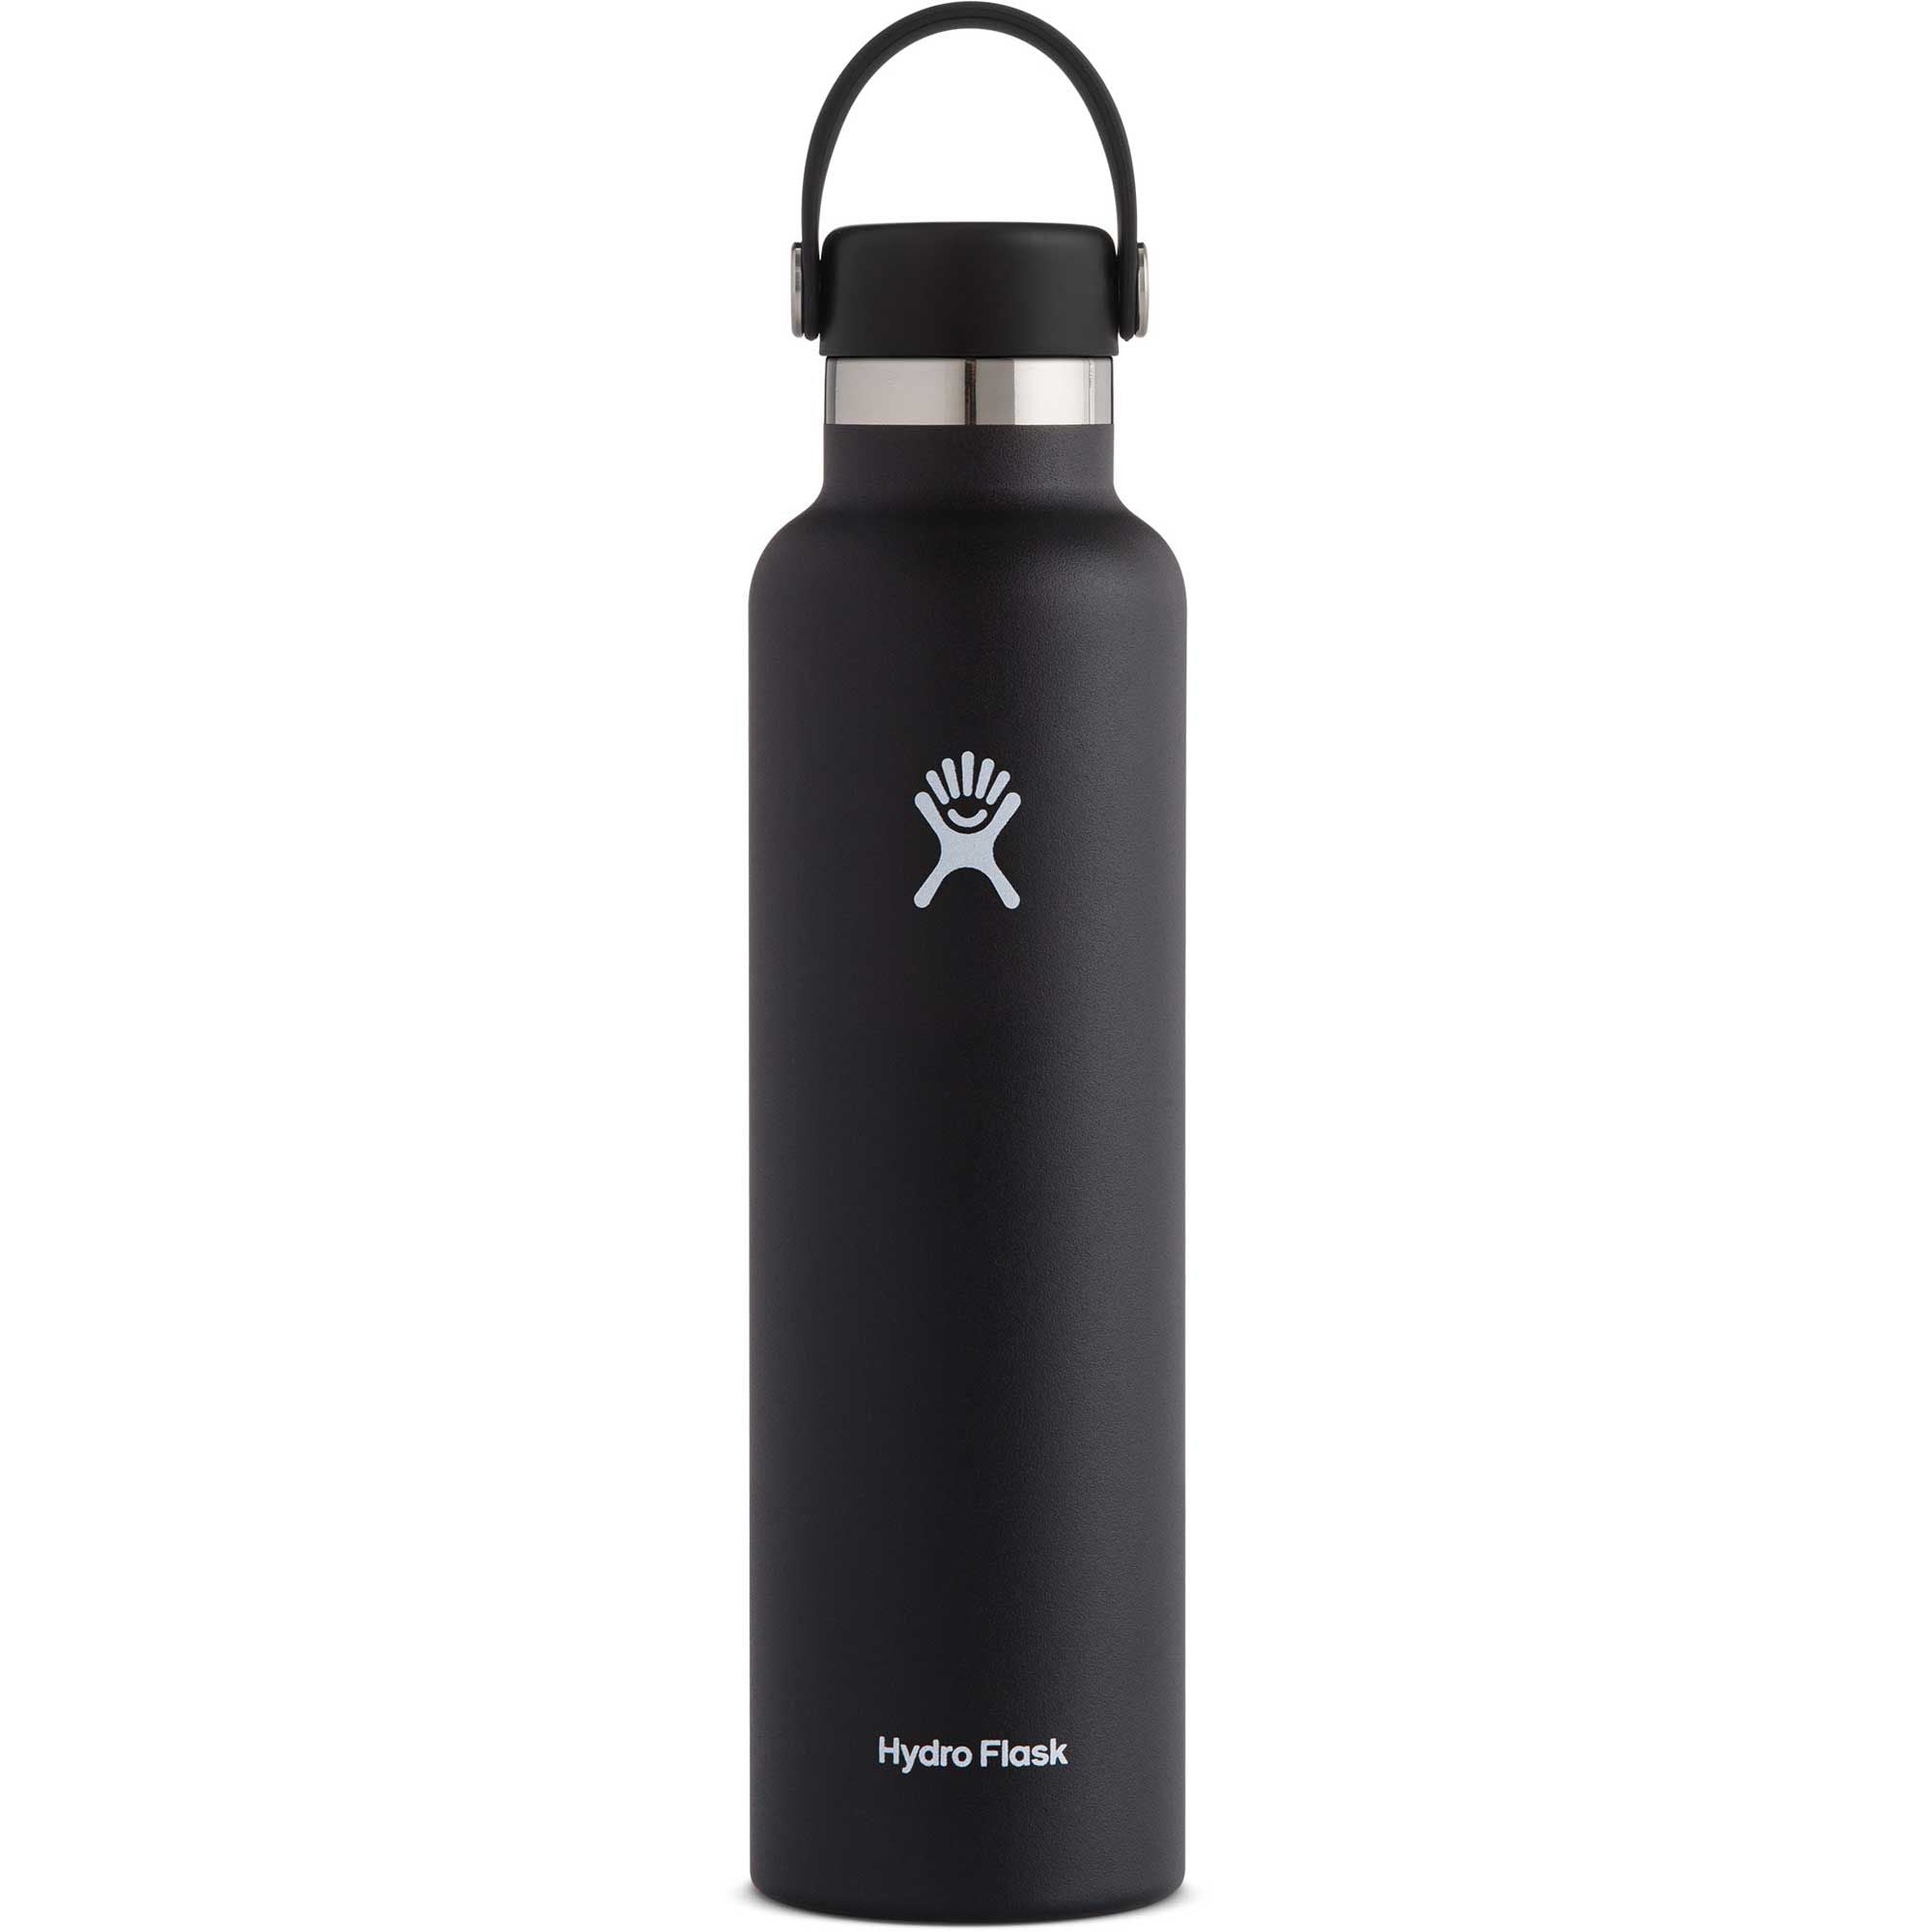 Hydro Flask Standard Mouth 24 oz. Bottle - Black